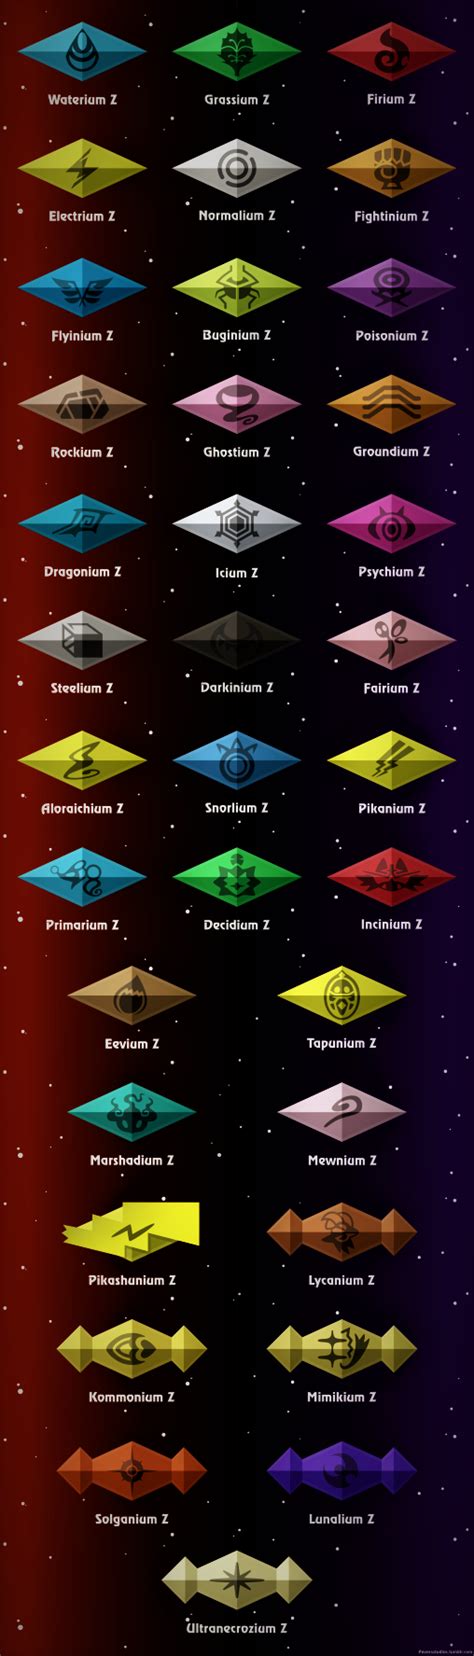 Z-Crystals by Pokemonsketchartist on DeviantArt